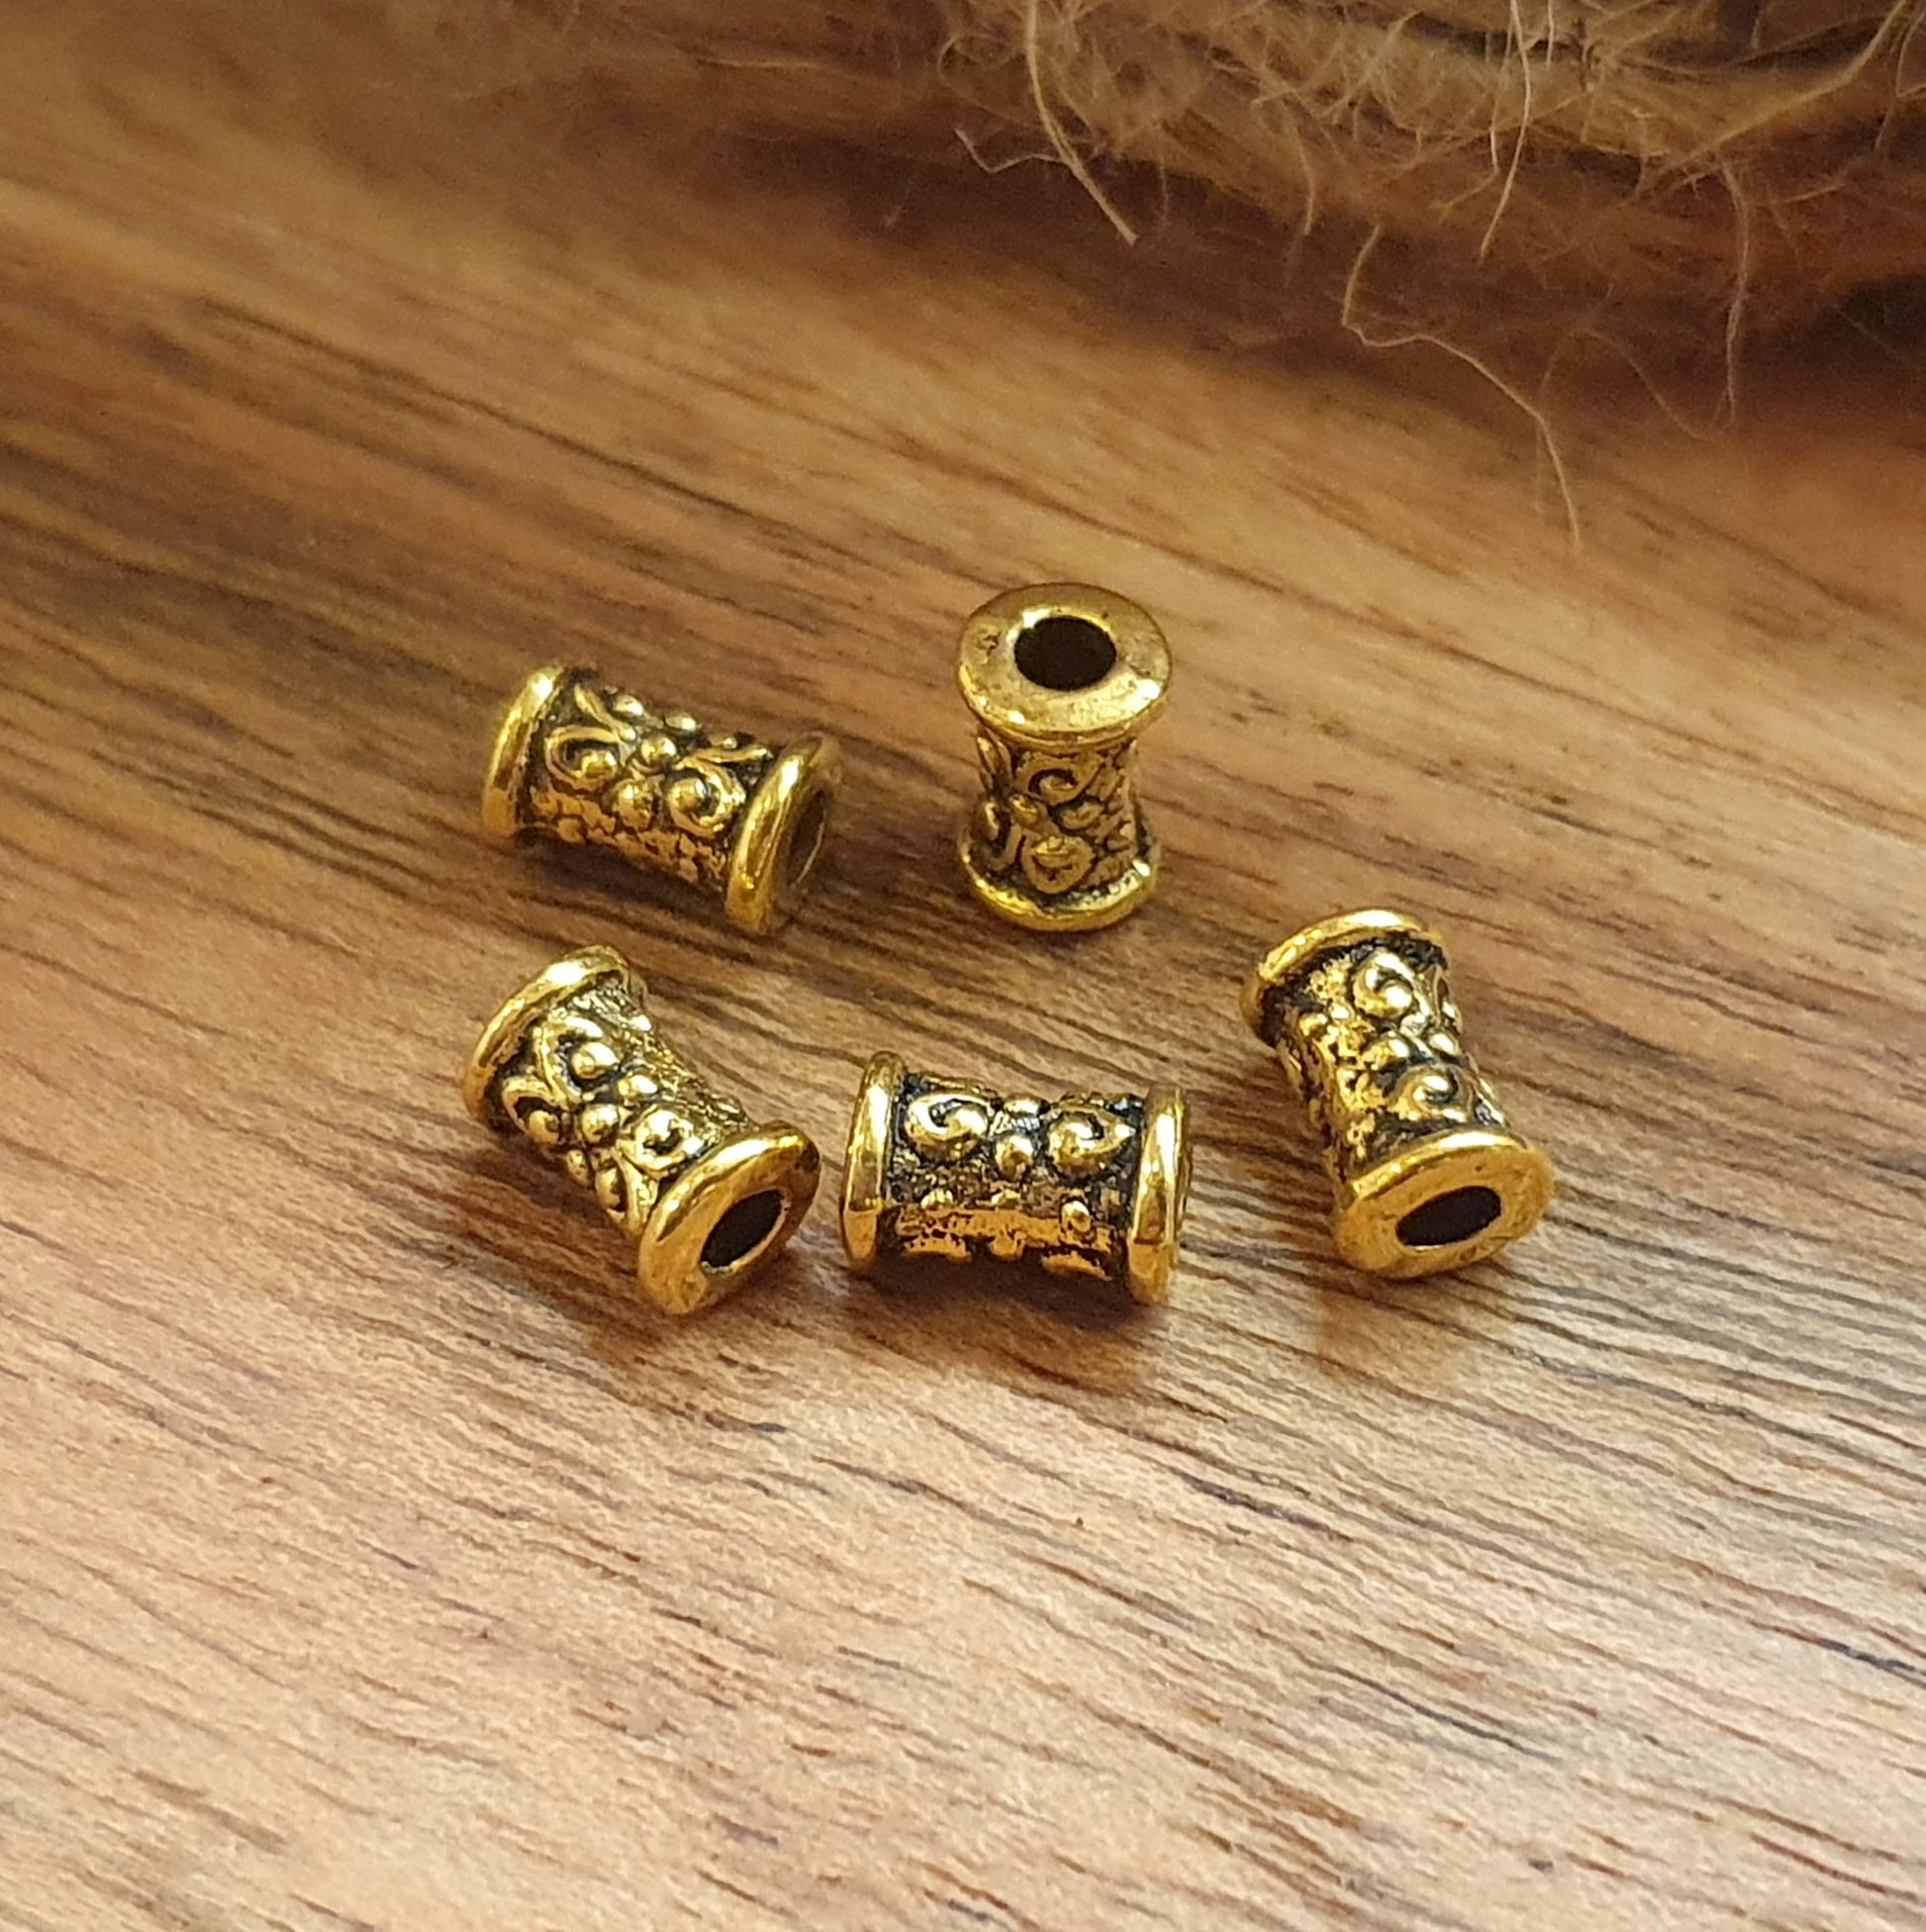 5 Metallperlen Tube mit Ethnomotiv in antik goldfarbig, 7,4mm5 Metallperlen Tube mit Ethnomotiv in antik goldfarbig, 7,6mm